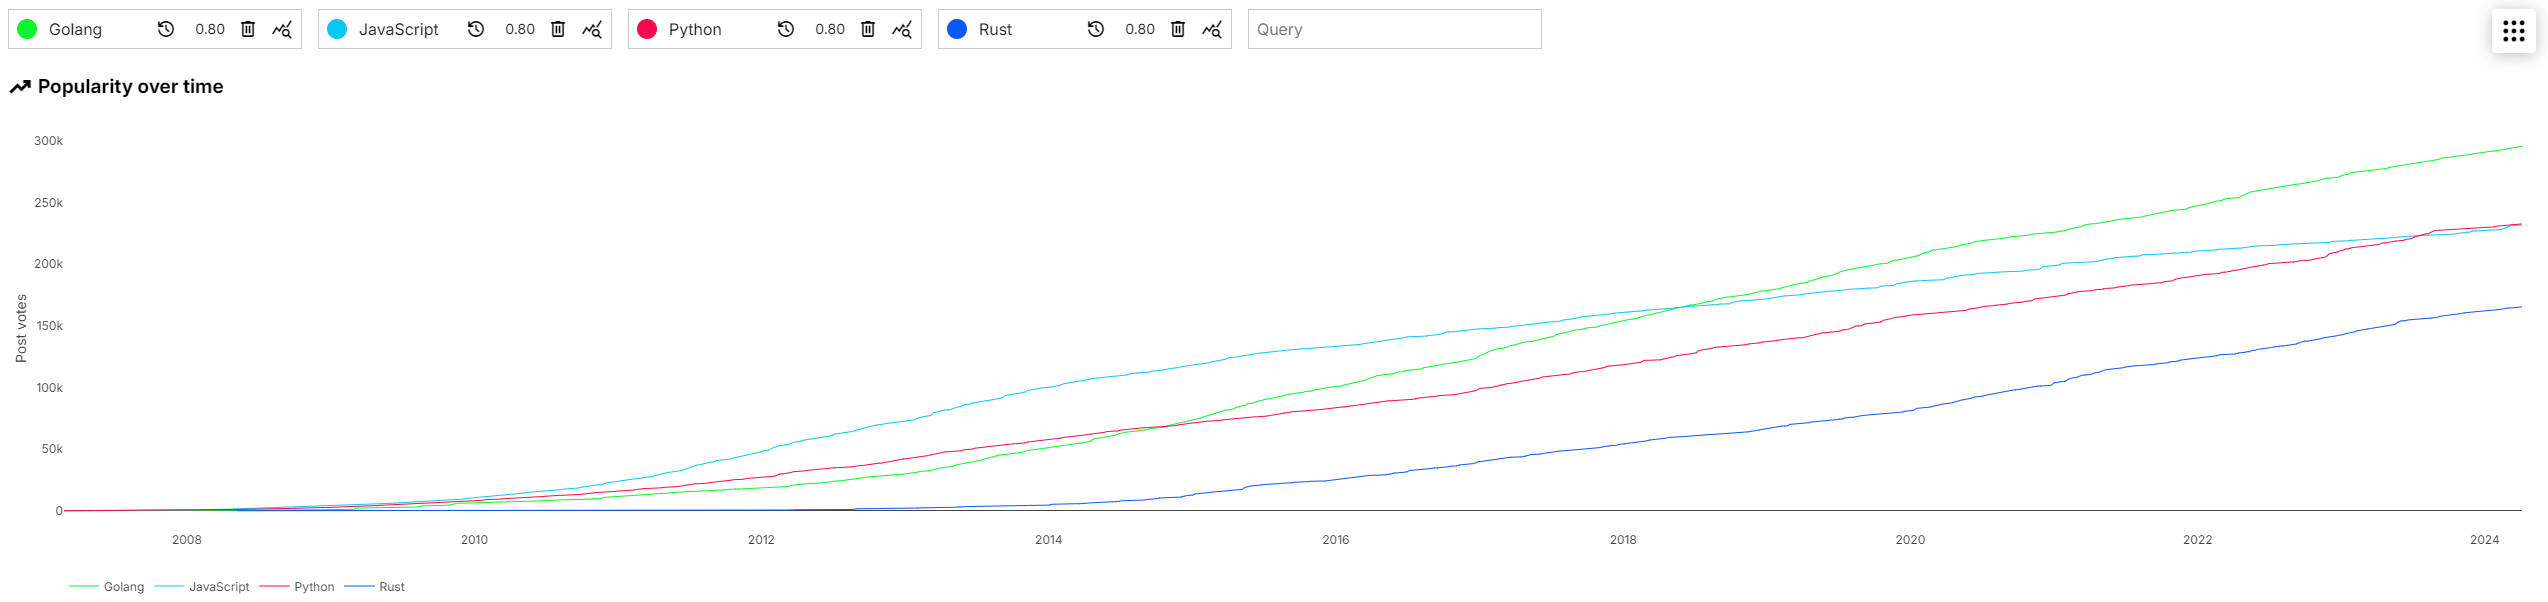 Popularity of Go, JavaScript, Python, and Rust.